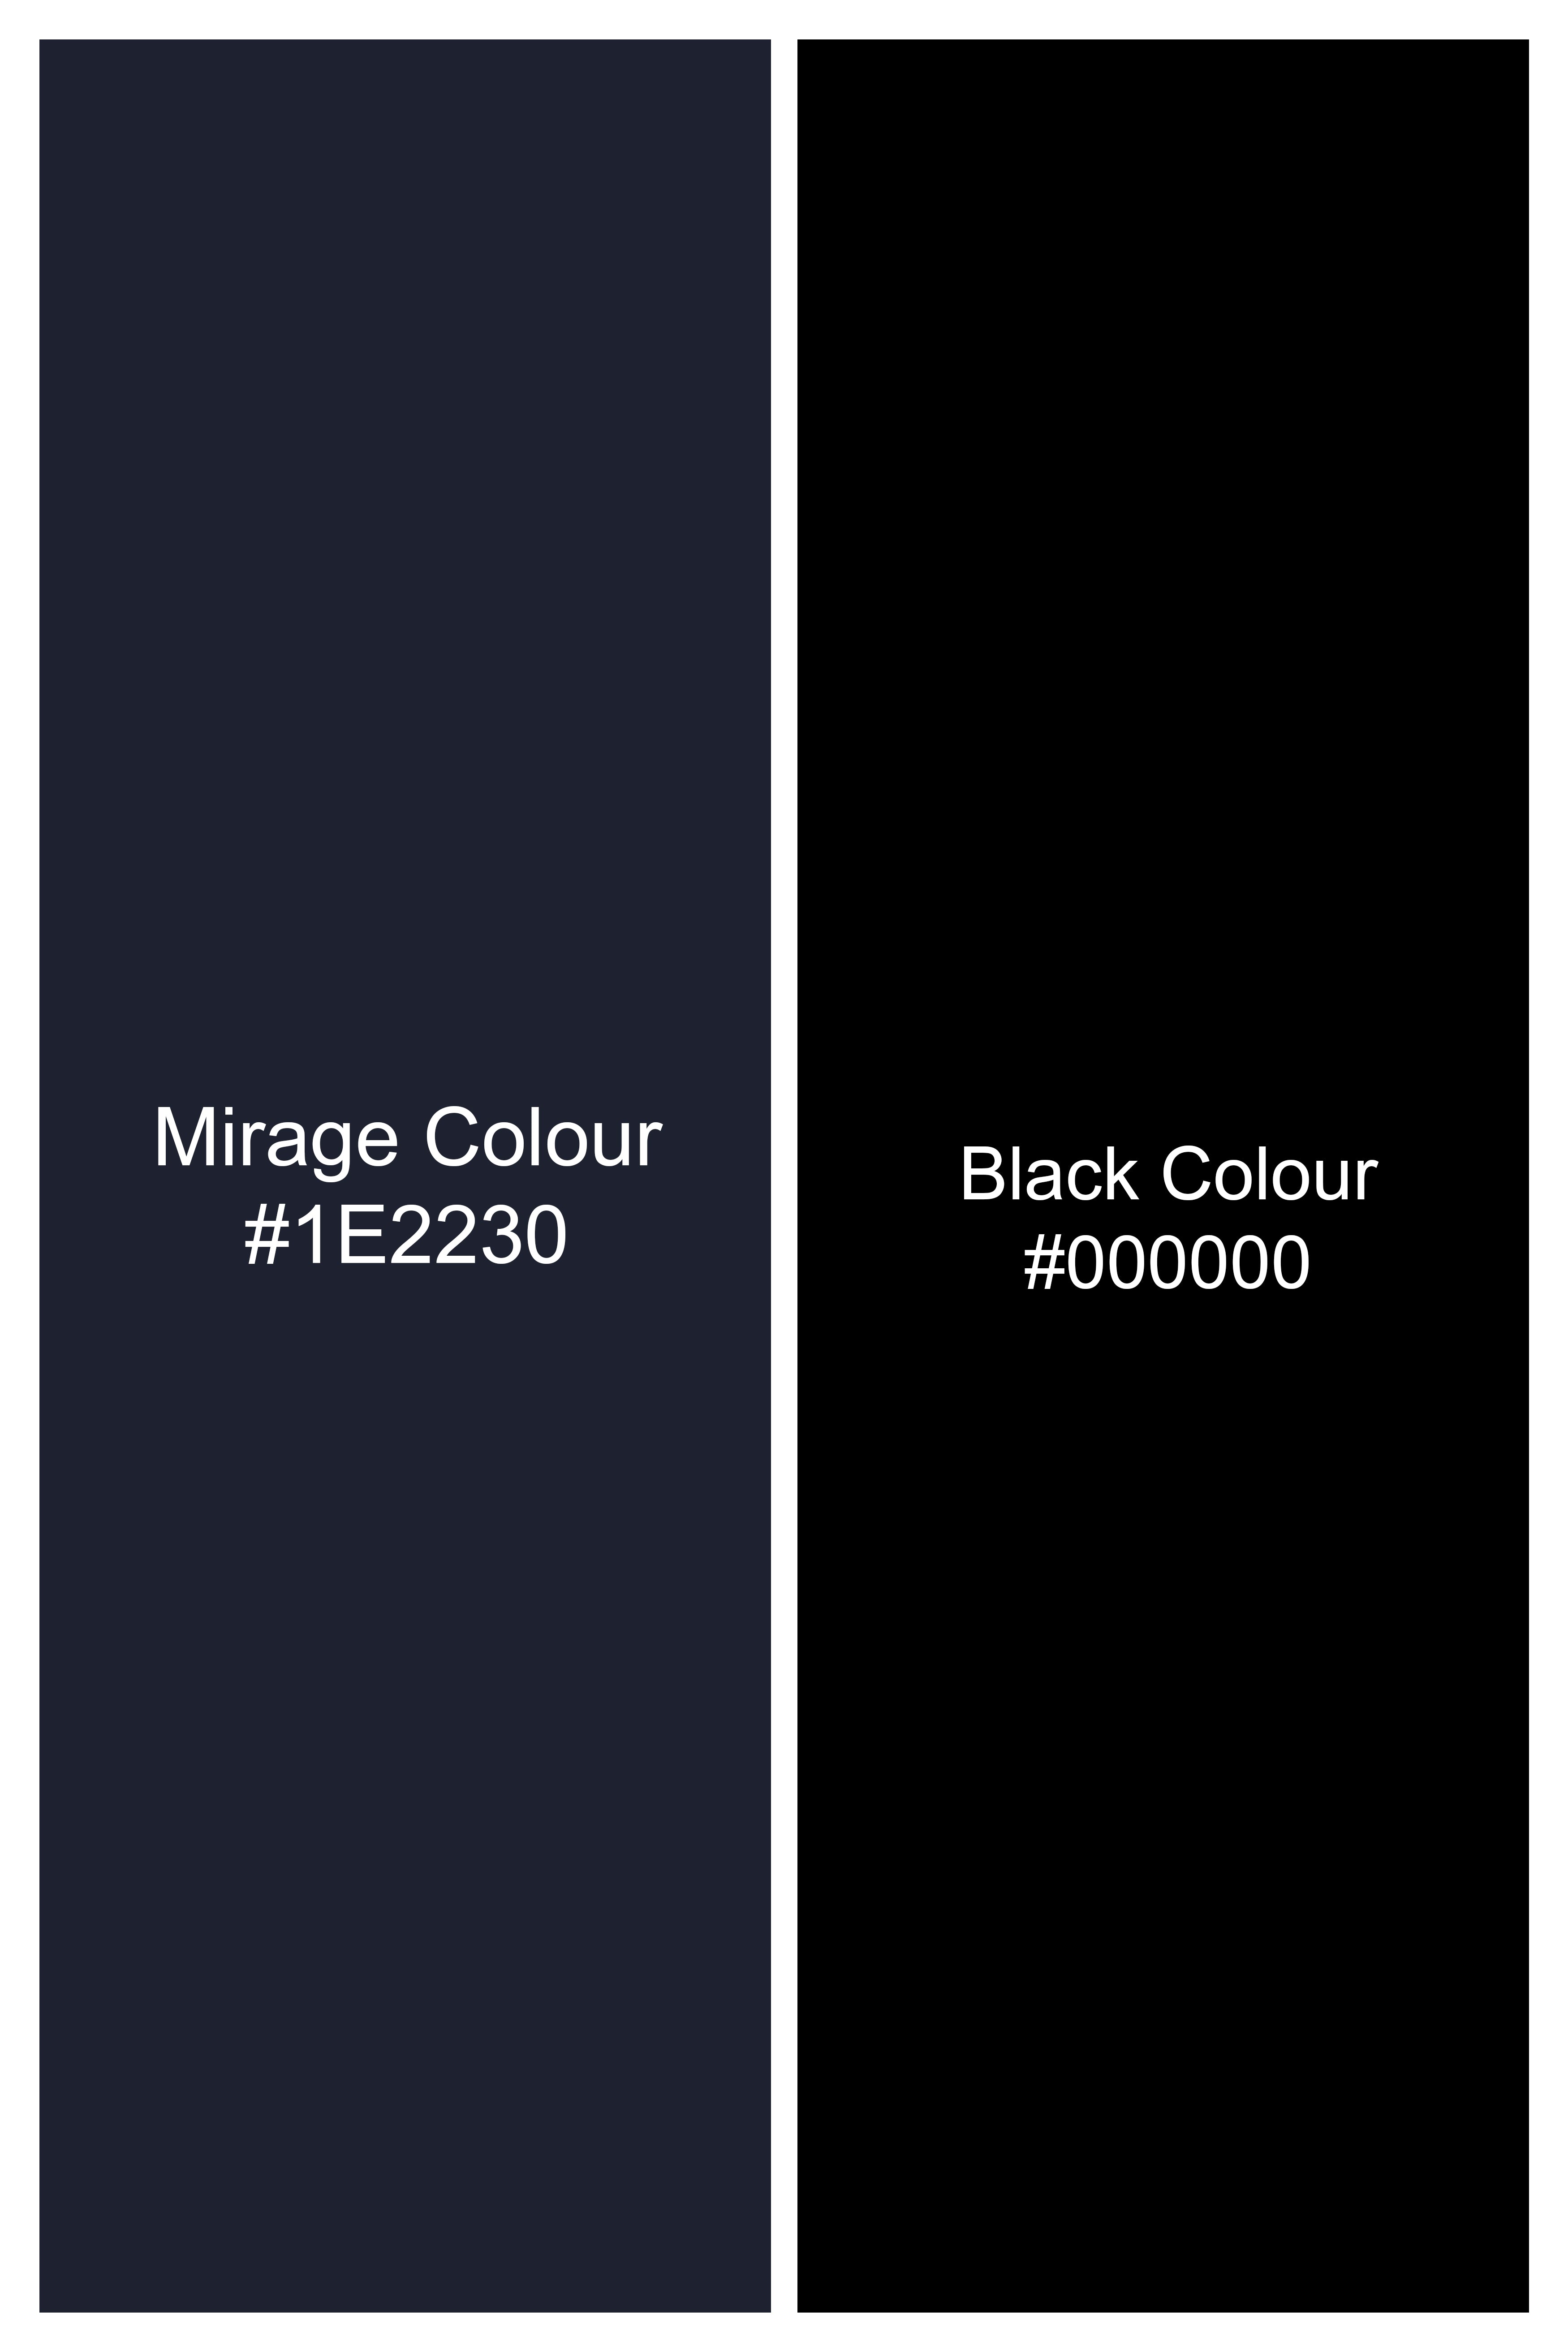 Mirage Blue and Black Horizontal Striped Wool Blend Blazer